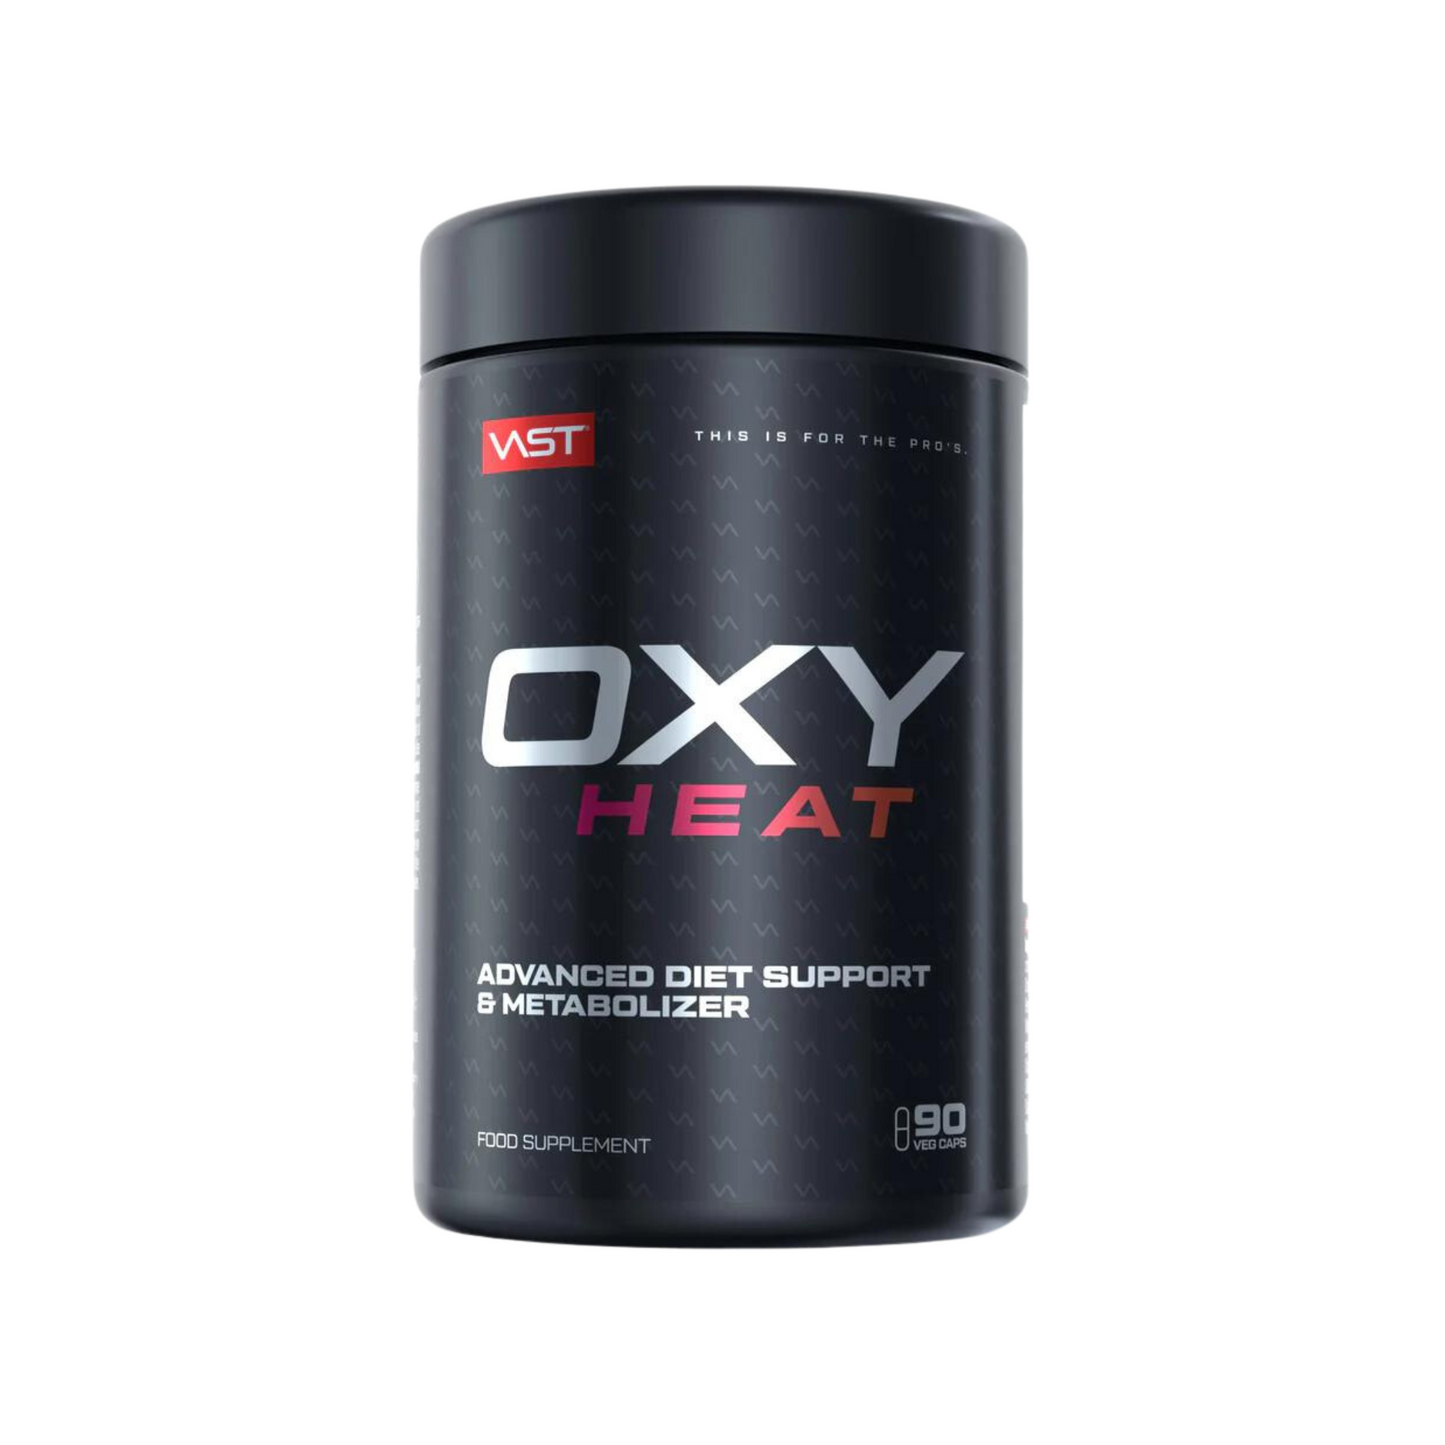 VAST Oxy Heat (Diet Support & Meta Booster) 90 Kapseln